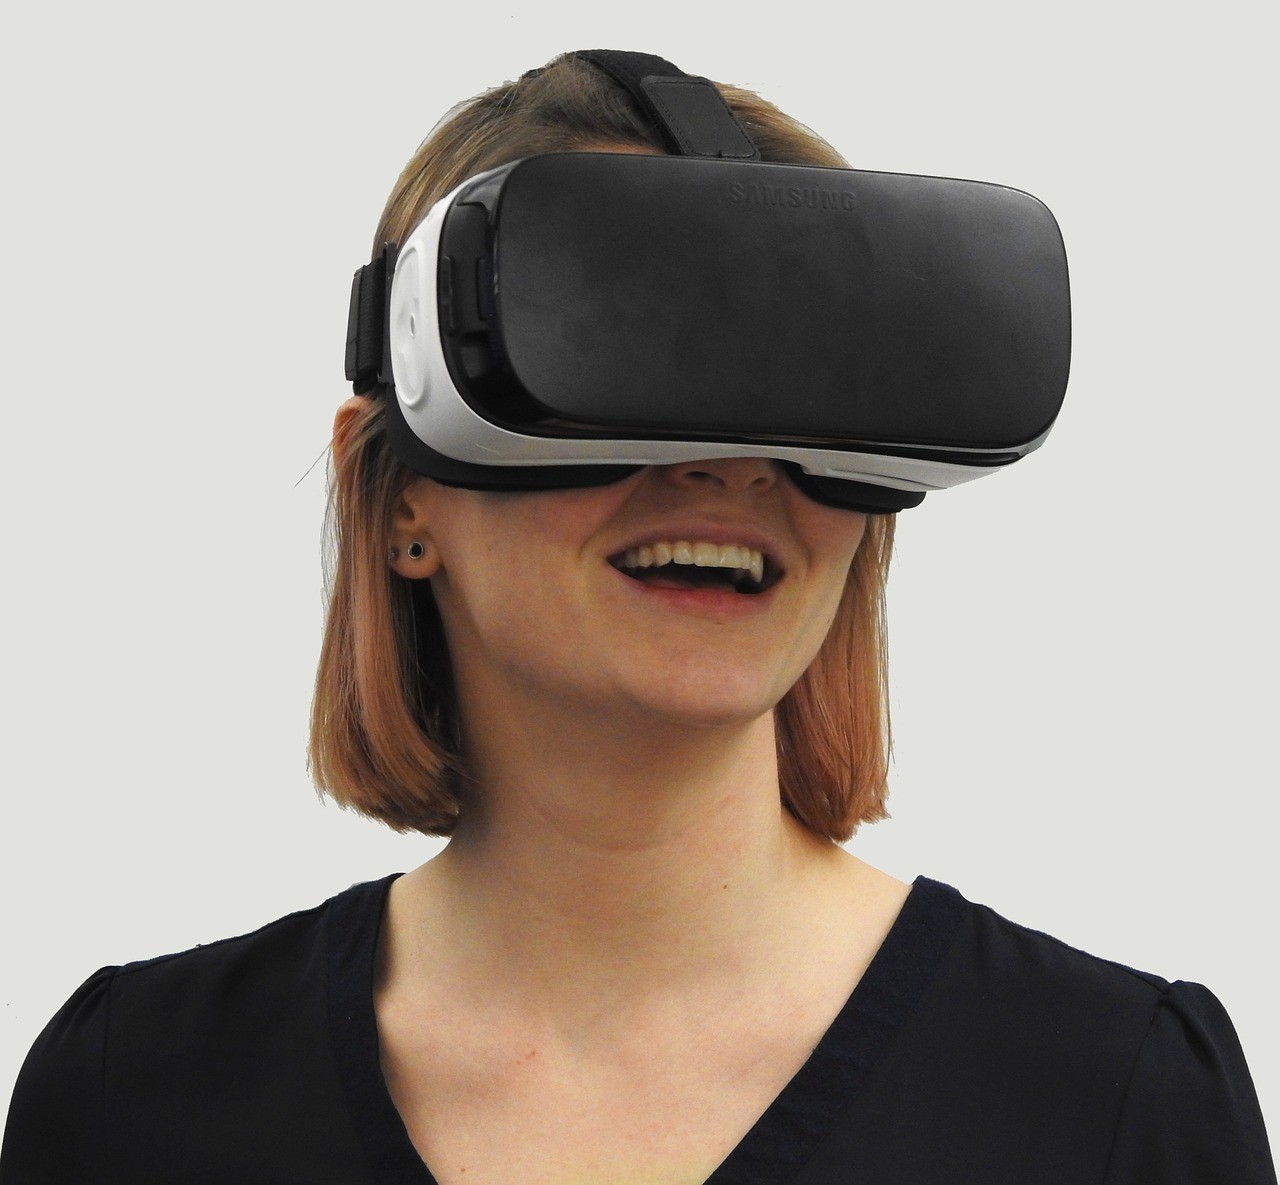 Onlineshoppen mit der Virtual Reality Technologie